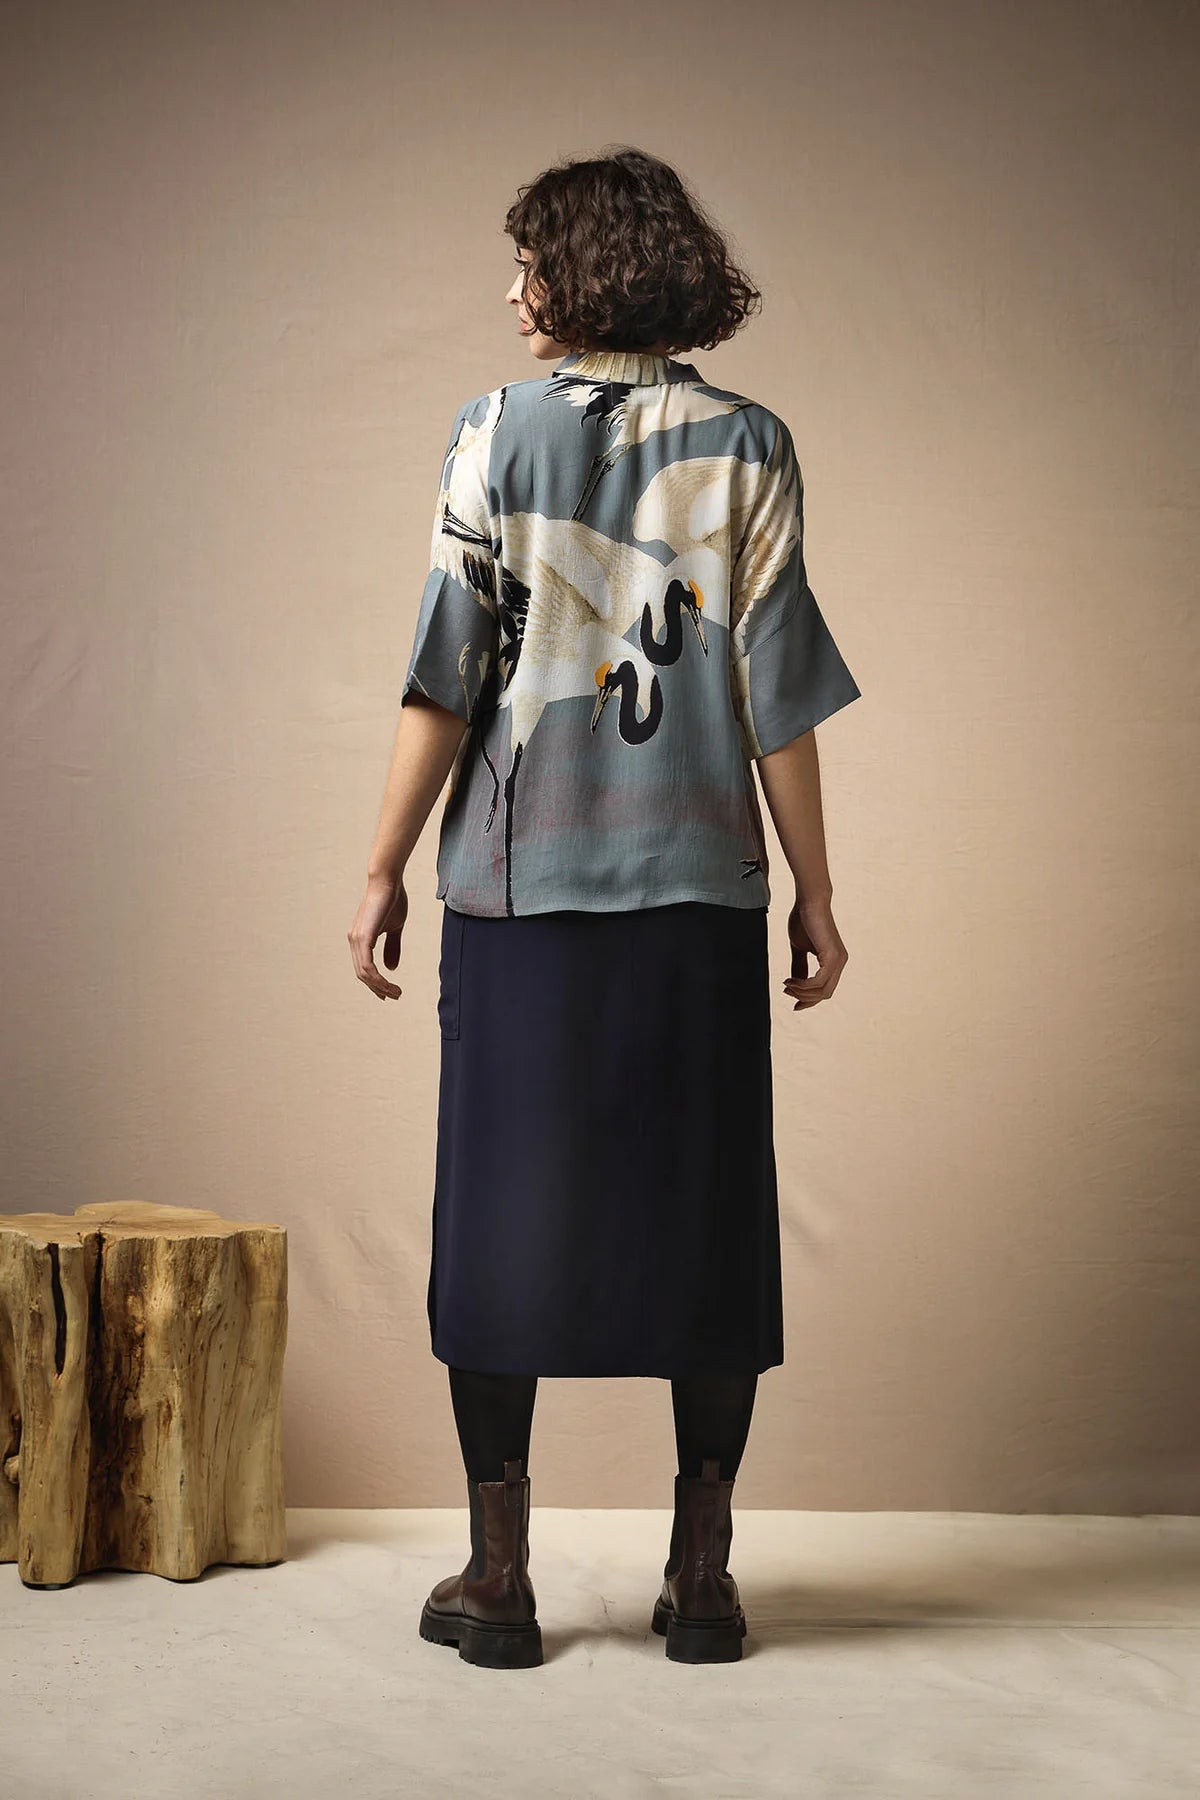 Slate Stork Pippa Top - The Nancy Smillie Shop - Art, Jewellery & Designer Gifts Glasgow